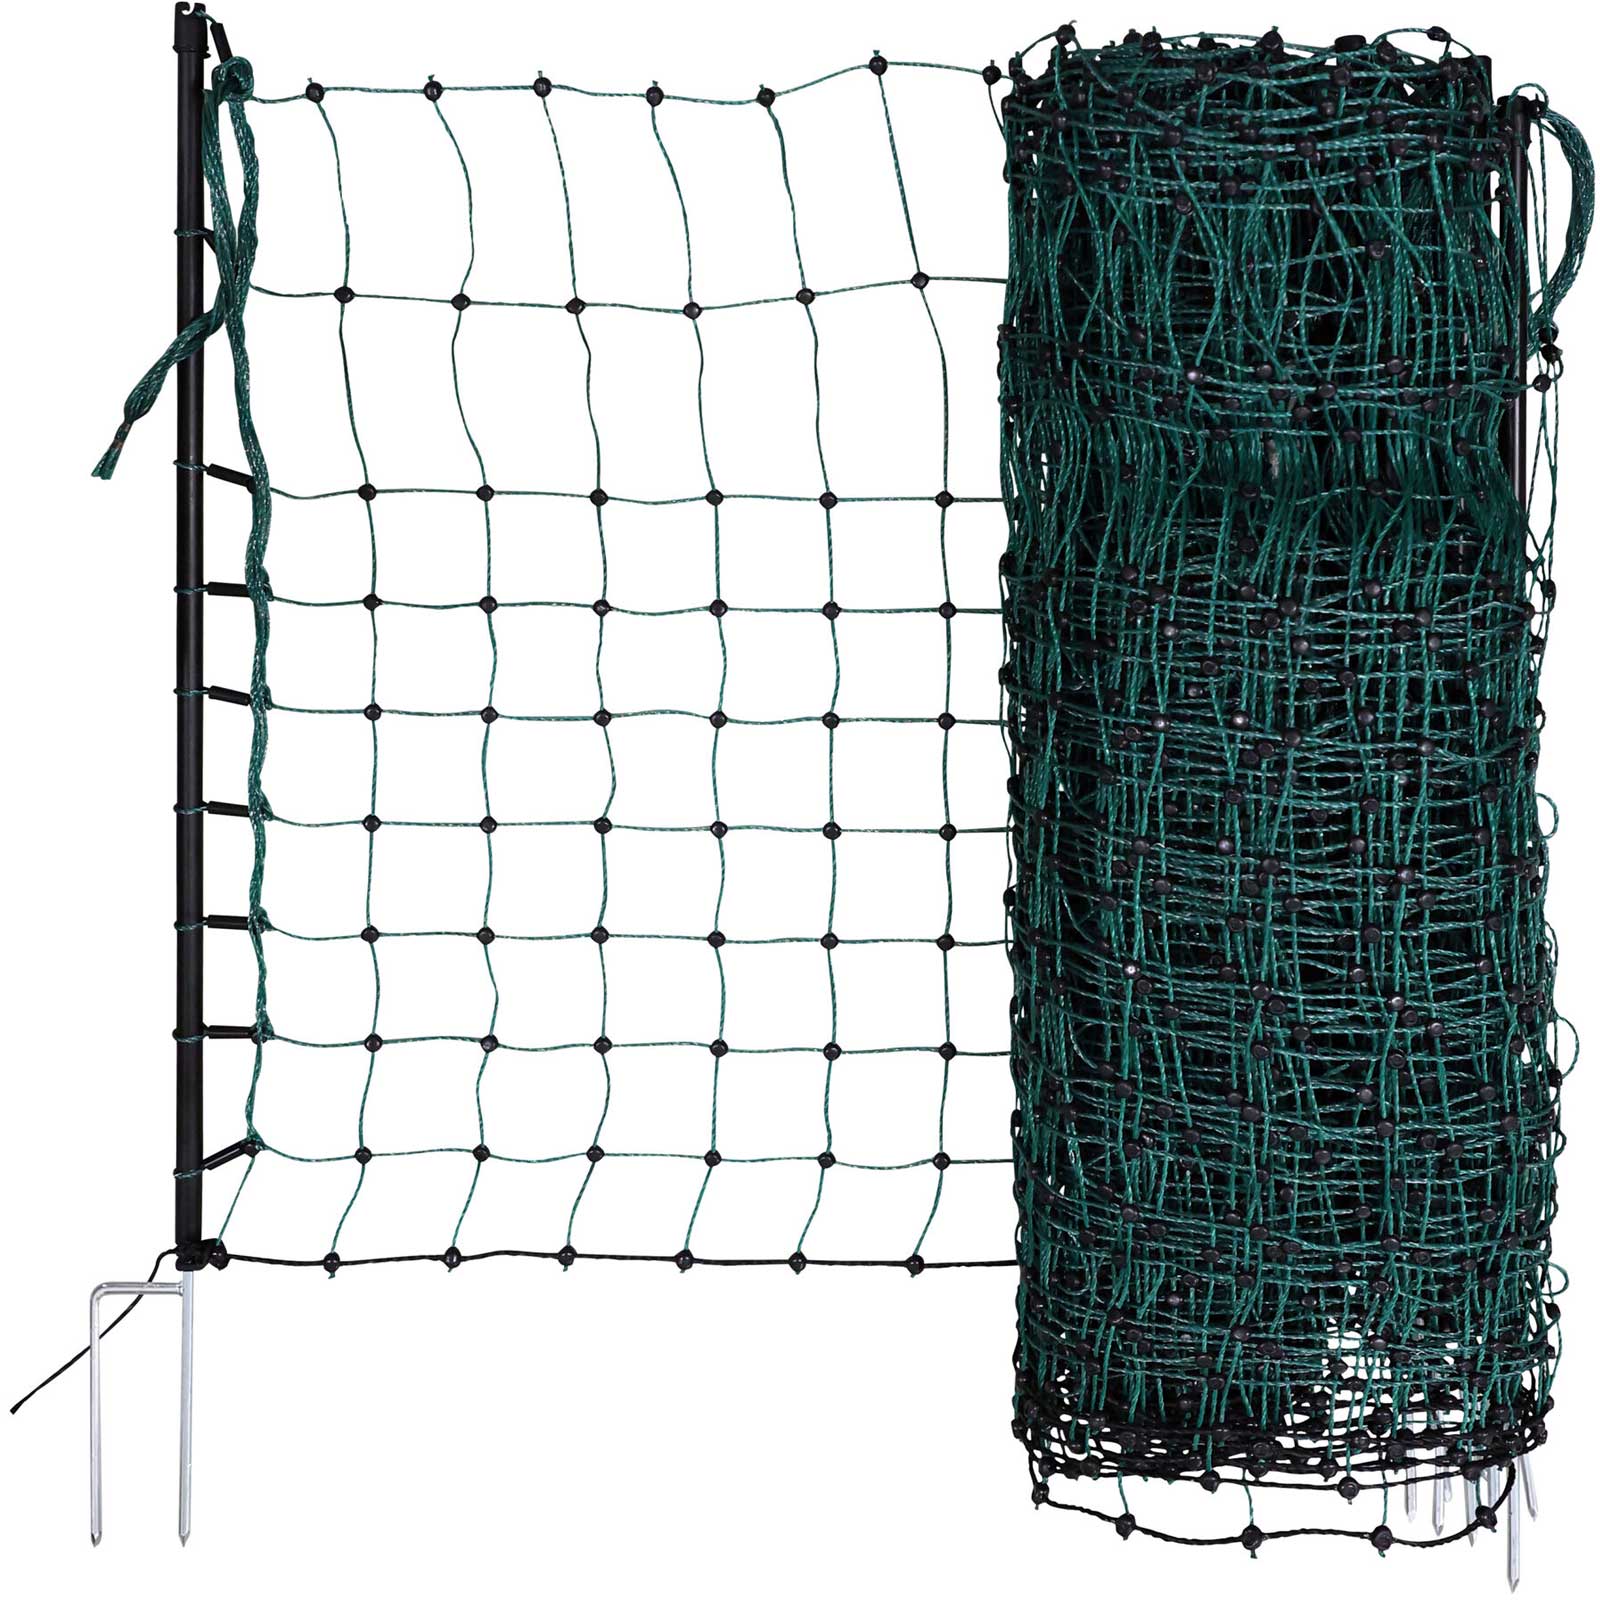 Rabbit netting double prong 50 m x 65 cm